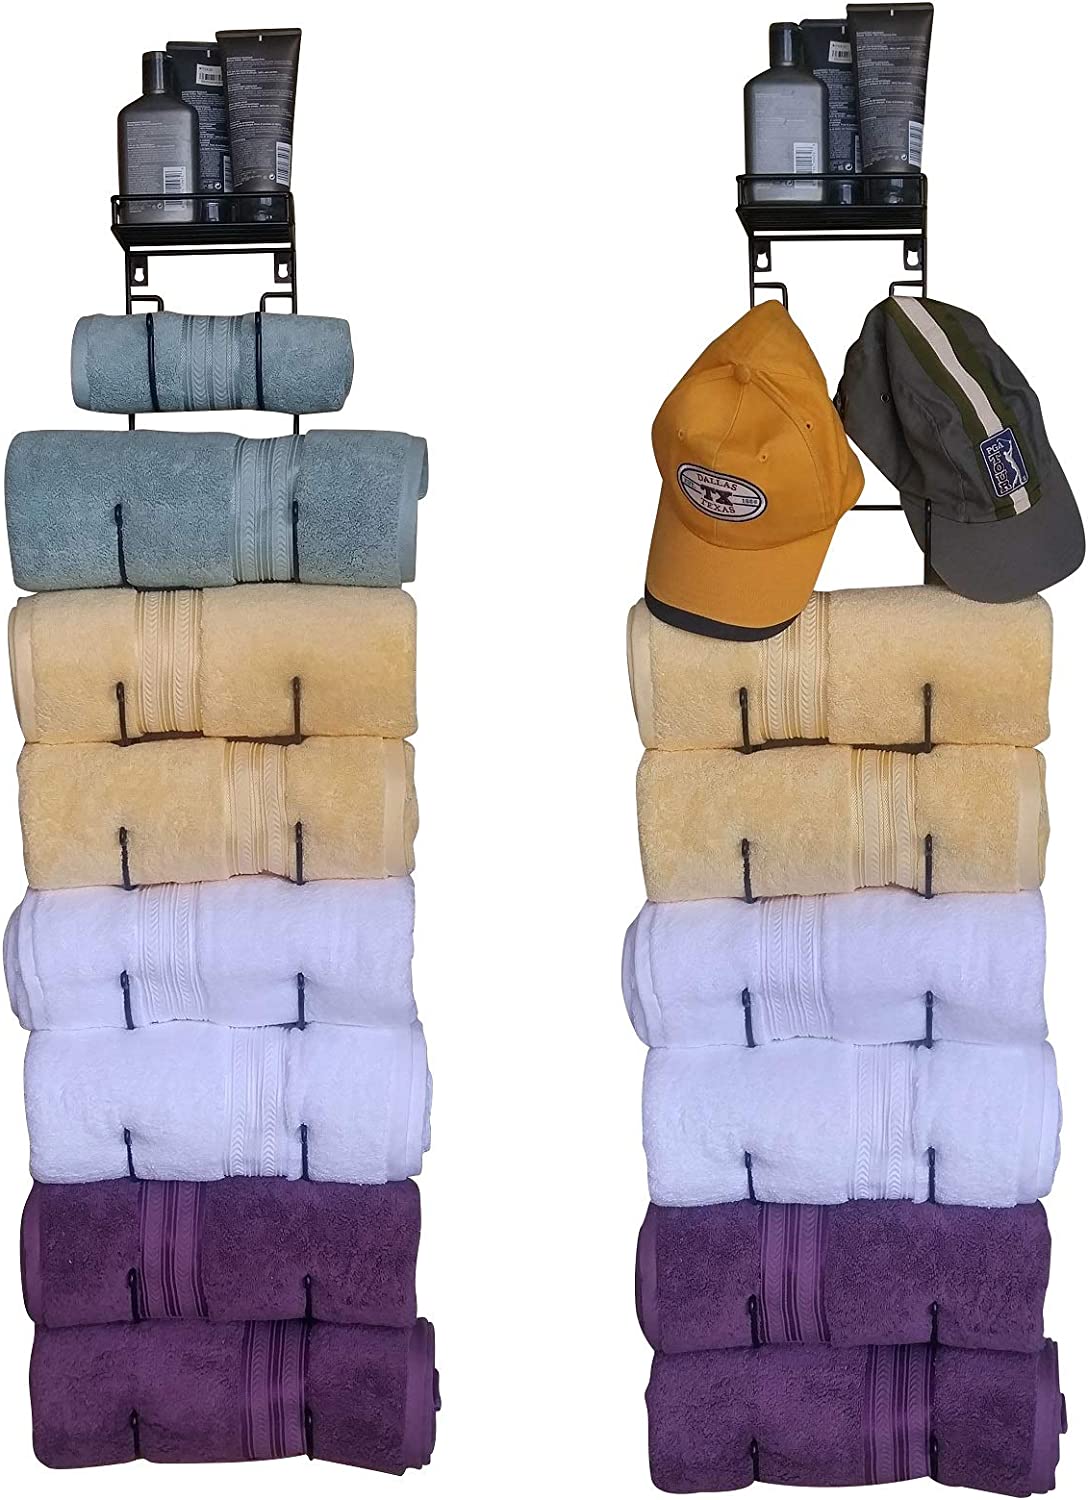 Premium Presents Bath Towel Rack in Bathroom. Wine Racks in Kitchen. Wall Mounted Shelves for Towels hat Organization. Great Decor Accessories. Metal Hooks. 3 Pieces Brand. (Black)